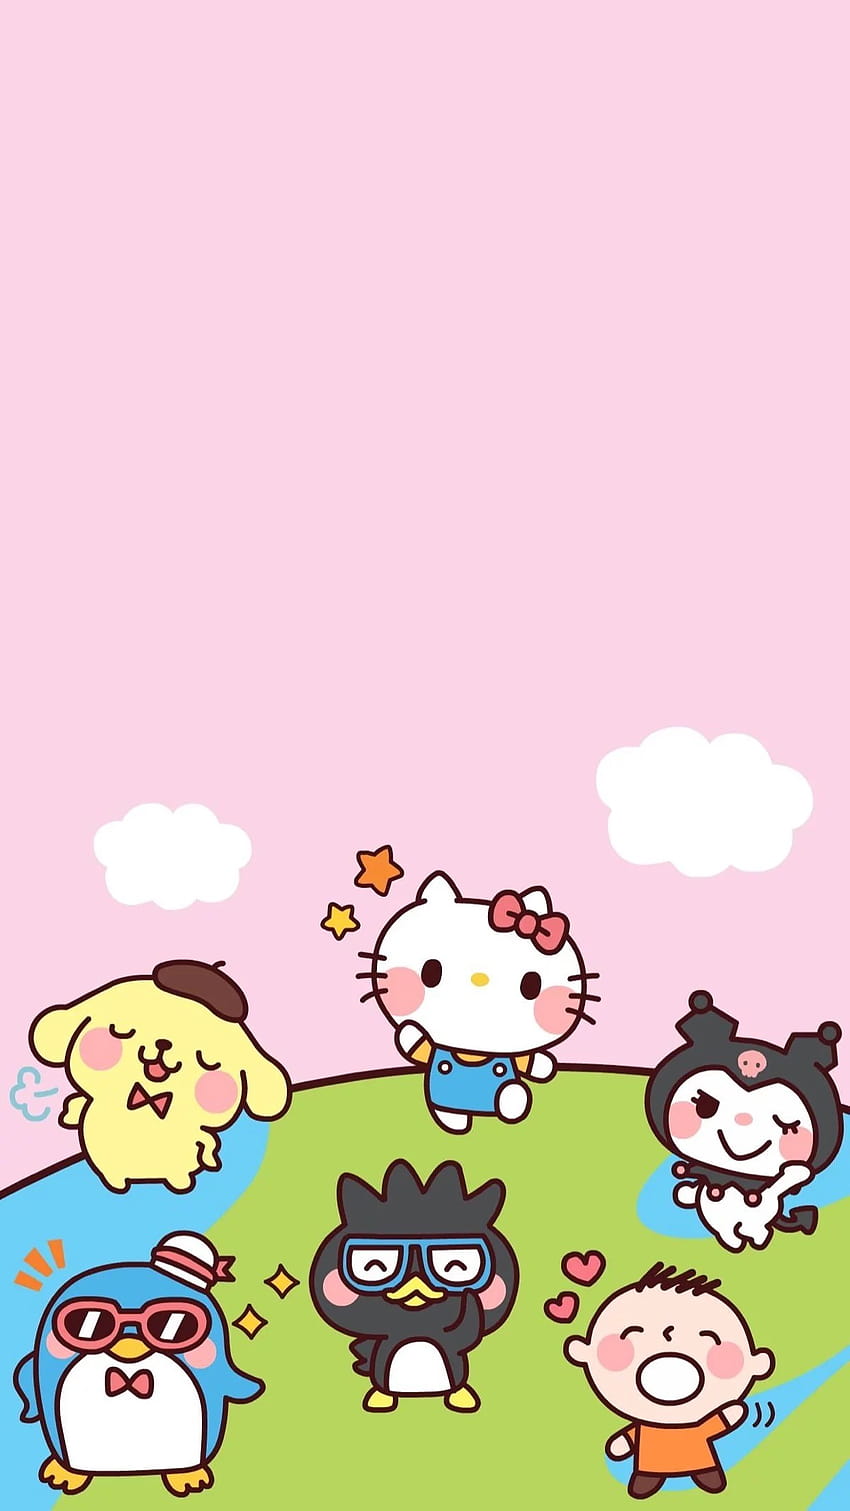 Hello Kitty wallpaper by ChillFriend  Download on ZEDGE  4cd3